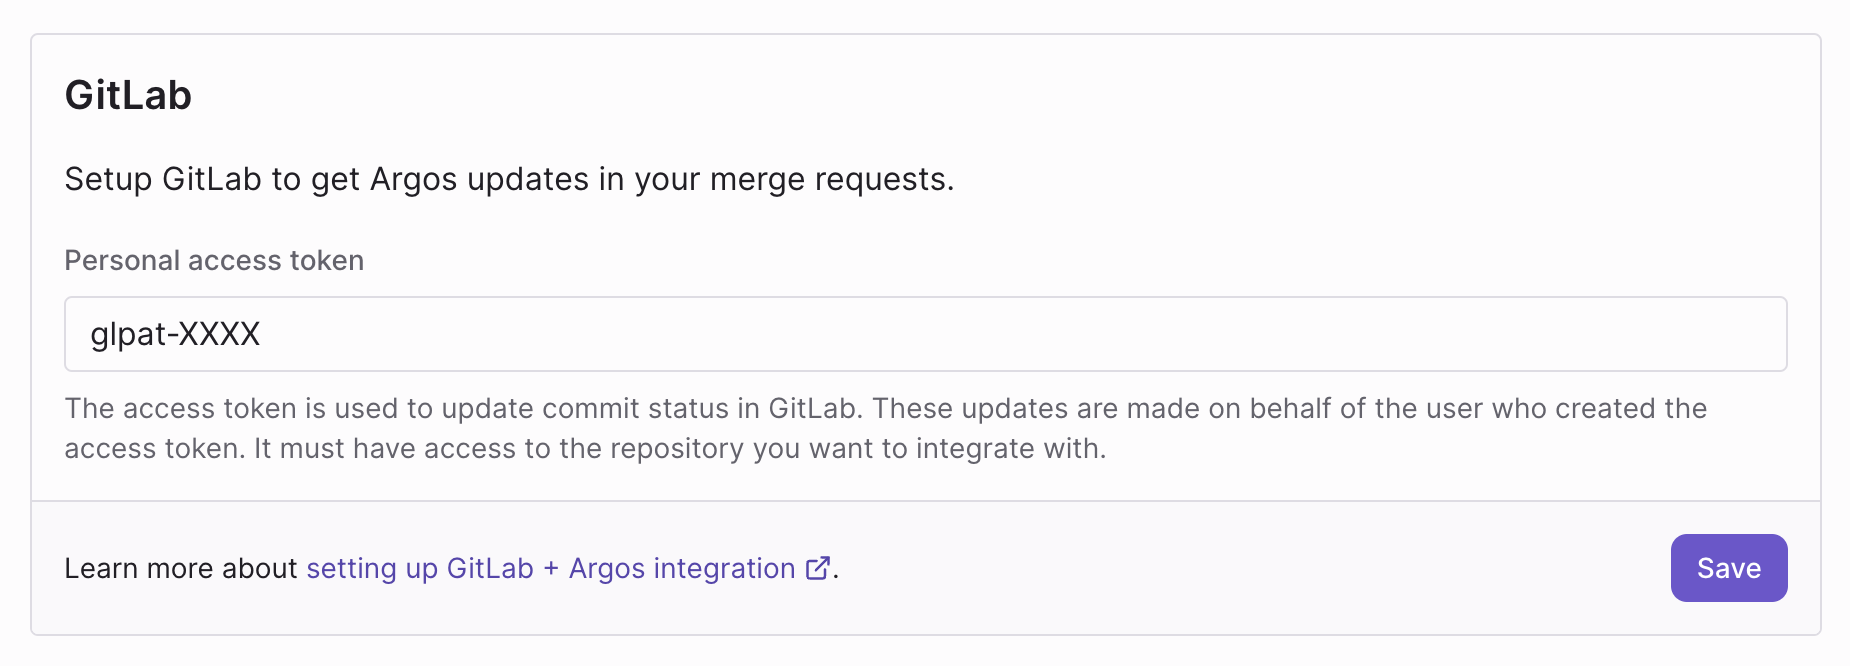 Configure GitLab in Argos